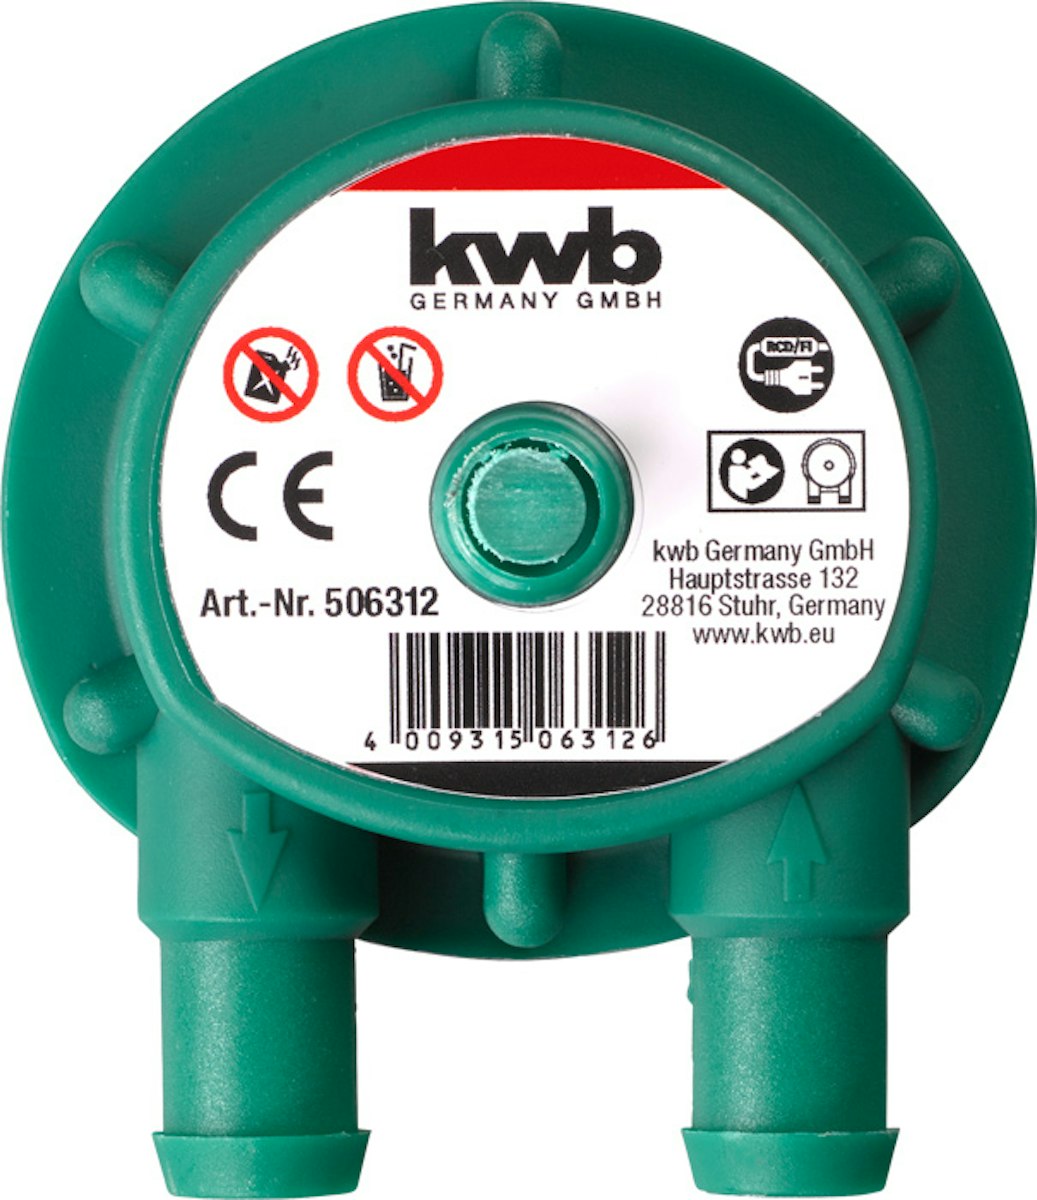 kwb Maxi-Pumpe P 63 LS 506312 von kwb Germany GmbH